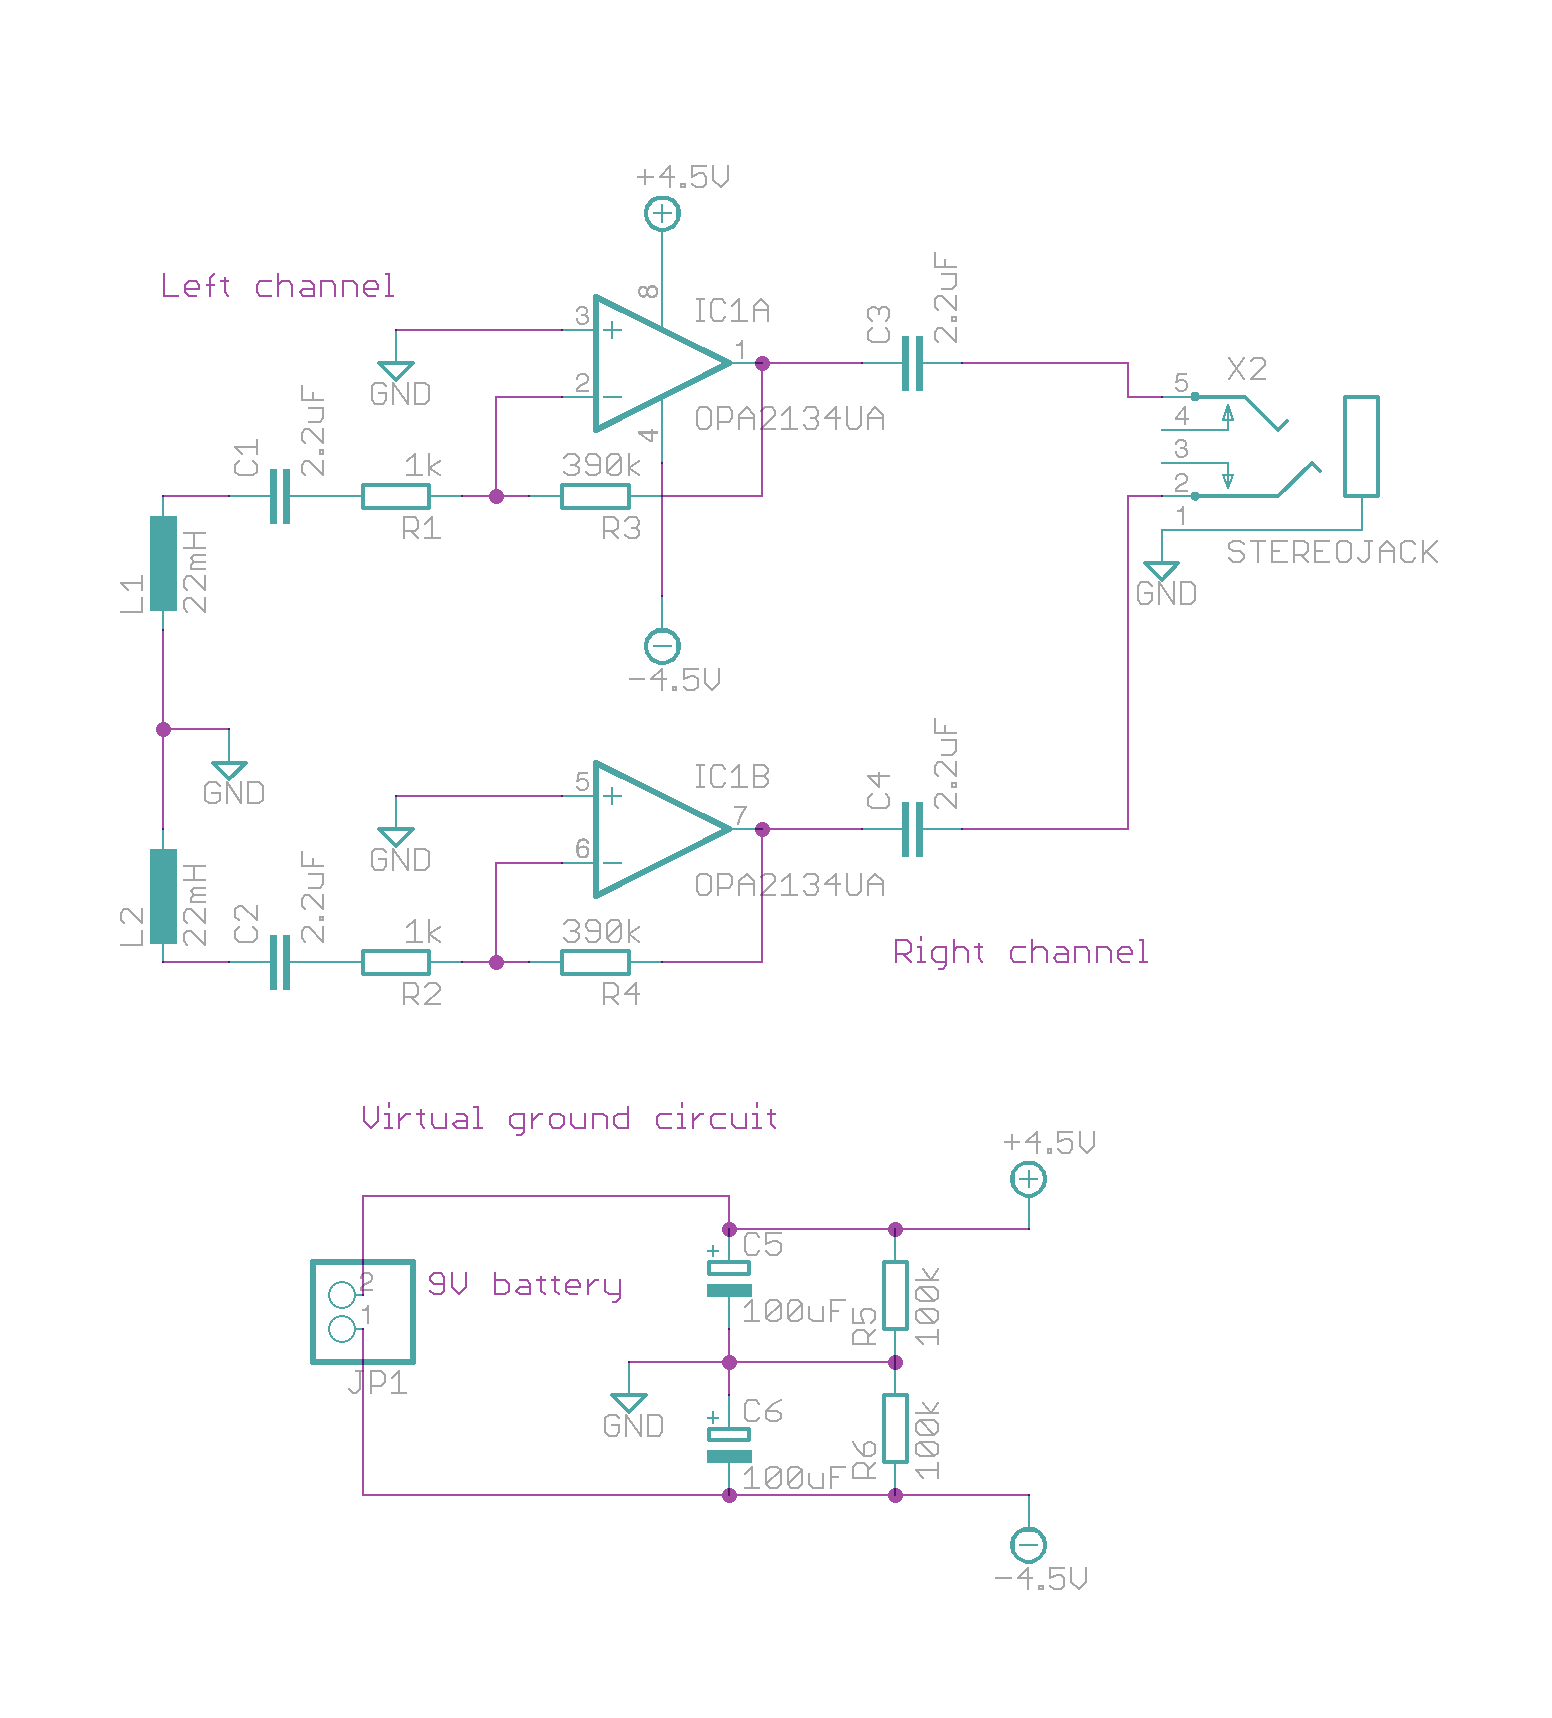 Elektrosluch schematic borrowed from https://github.com/LOM-instruments/Elektrosluch-DIY - Licence GPLv3